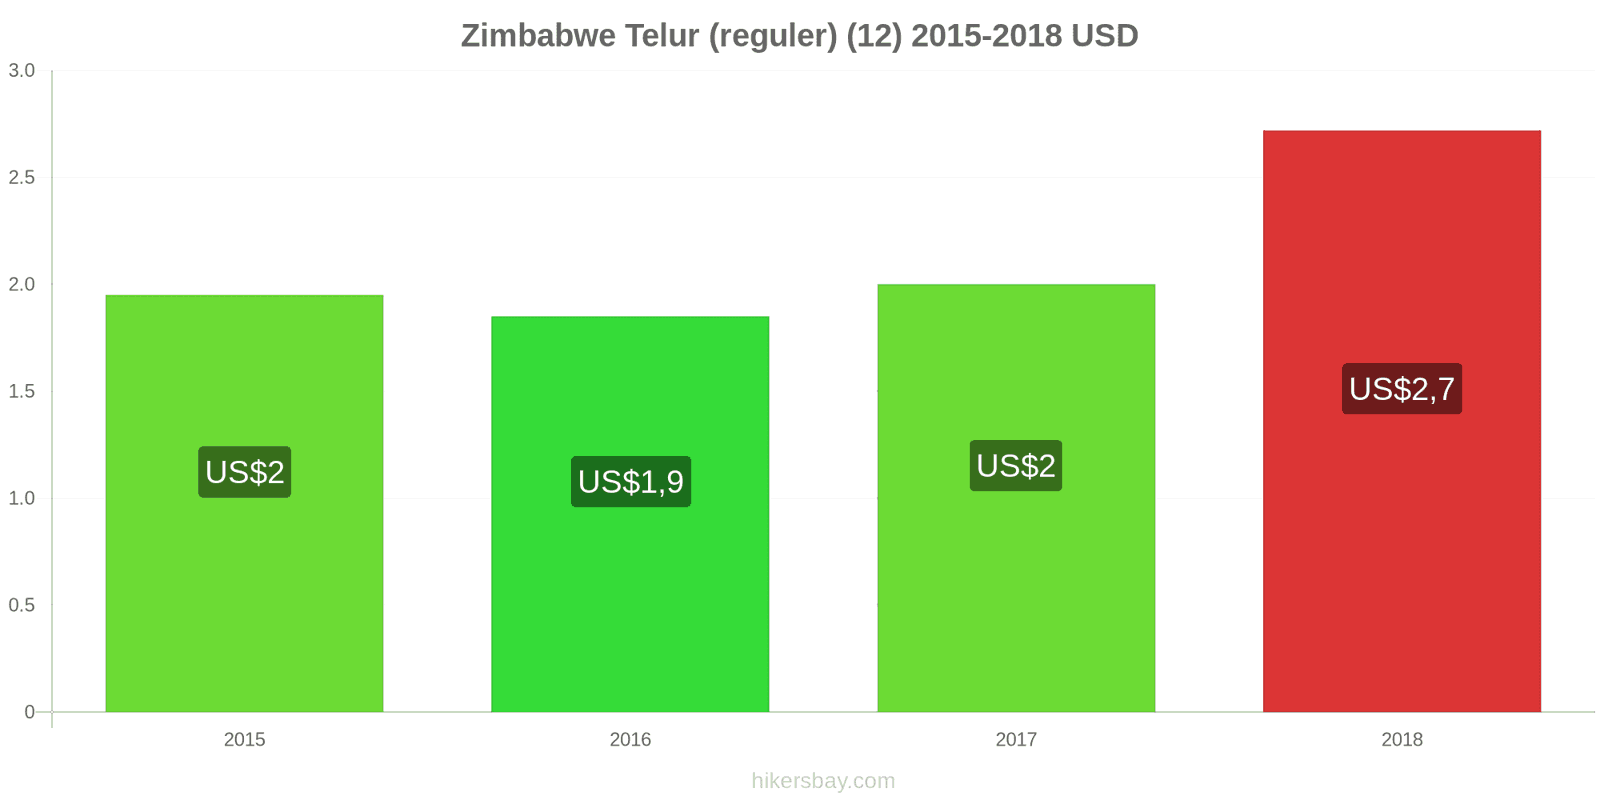 Zimbabwe perubahan harga Telur (biasa) (12) hikersbay.com